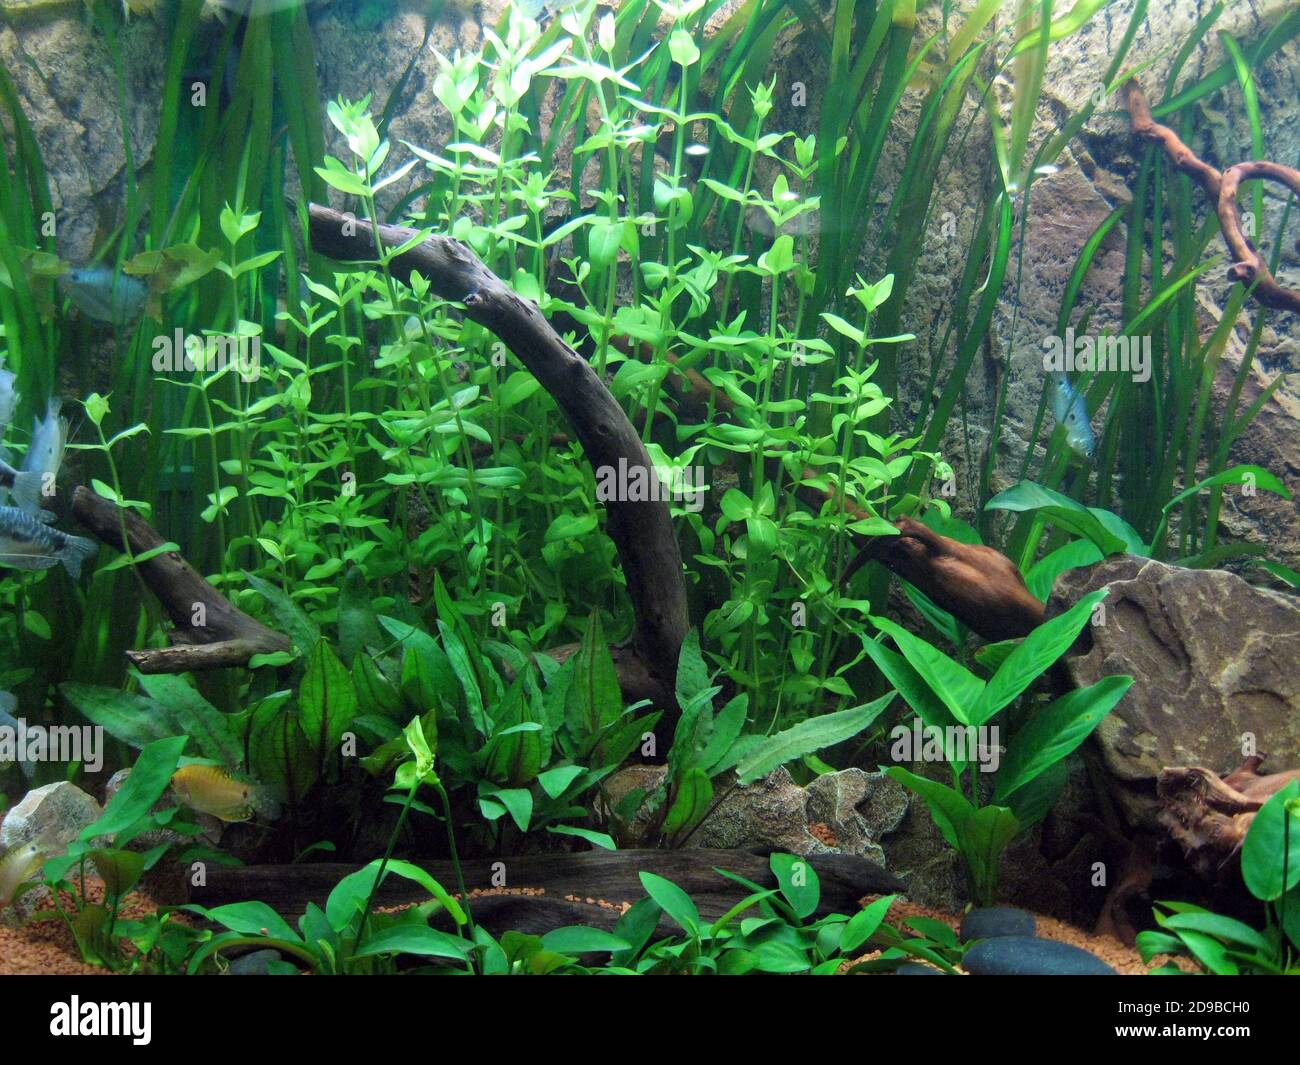 Biotope aquarium hi-res stock photography and images - Alamy